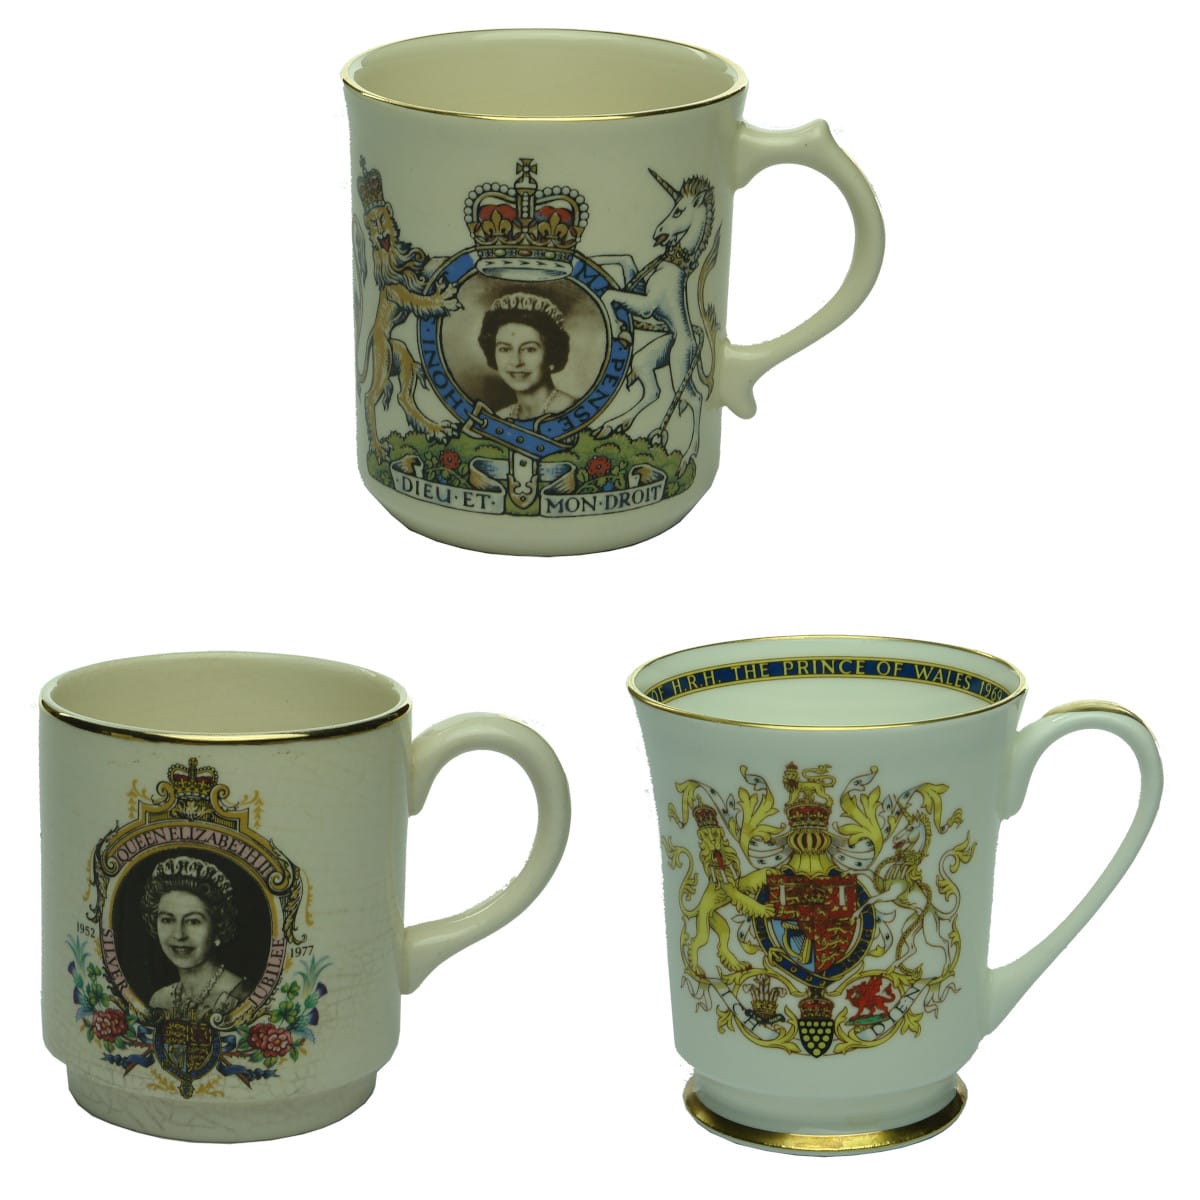 3 Pieces Coronation Ware. 2 x Queen Elizabeth Silver Jubilee, 1977. 1 x Prince of Wales 1969.